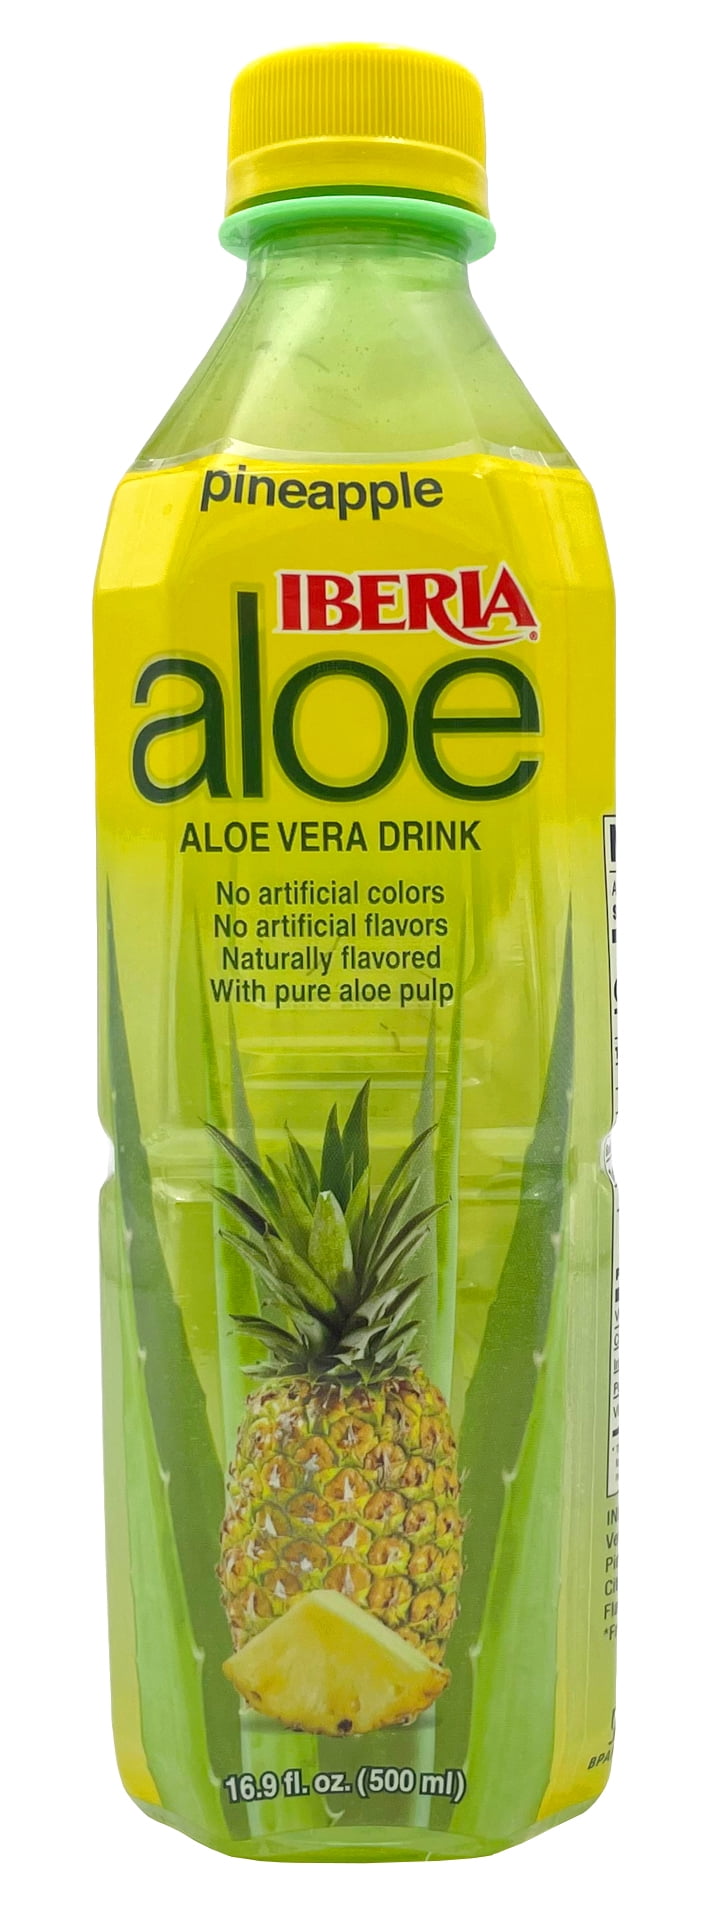 Iberia Aloe Pineapple Aloe Vera Drink, 16.9 fl oz